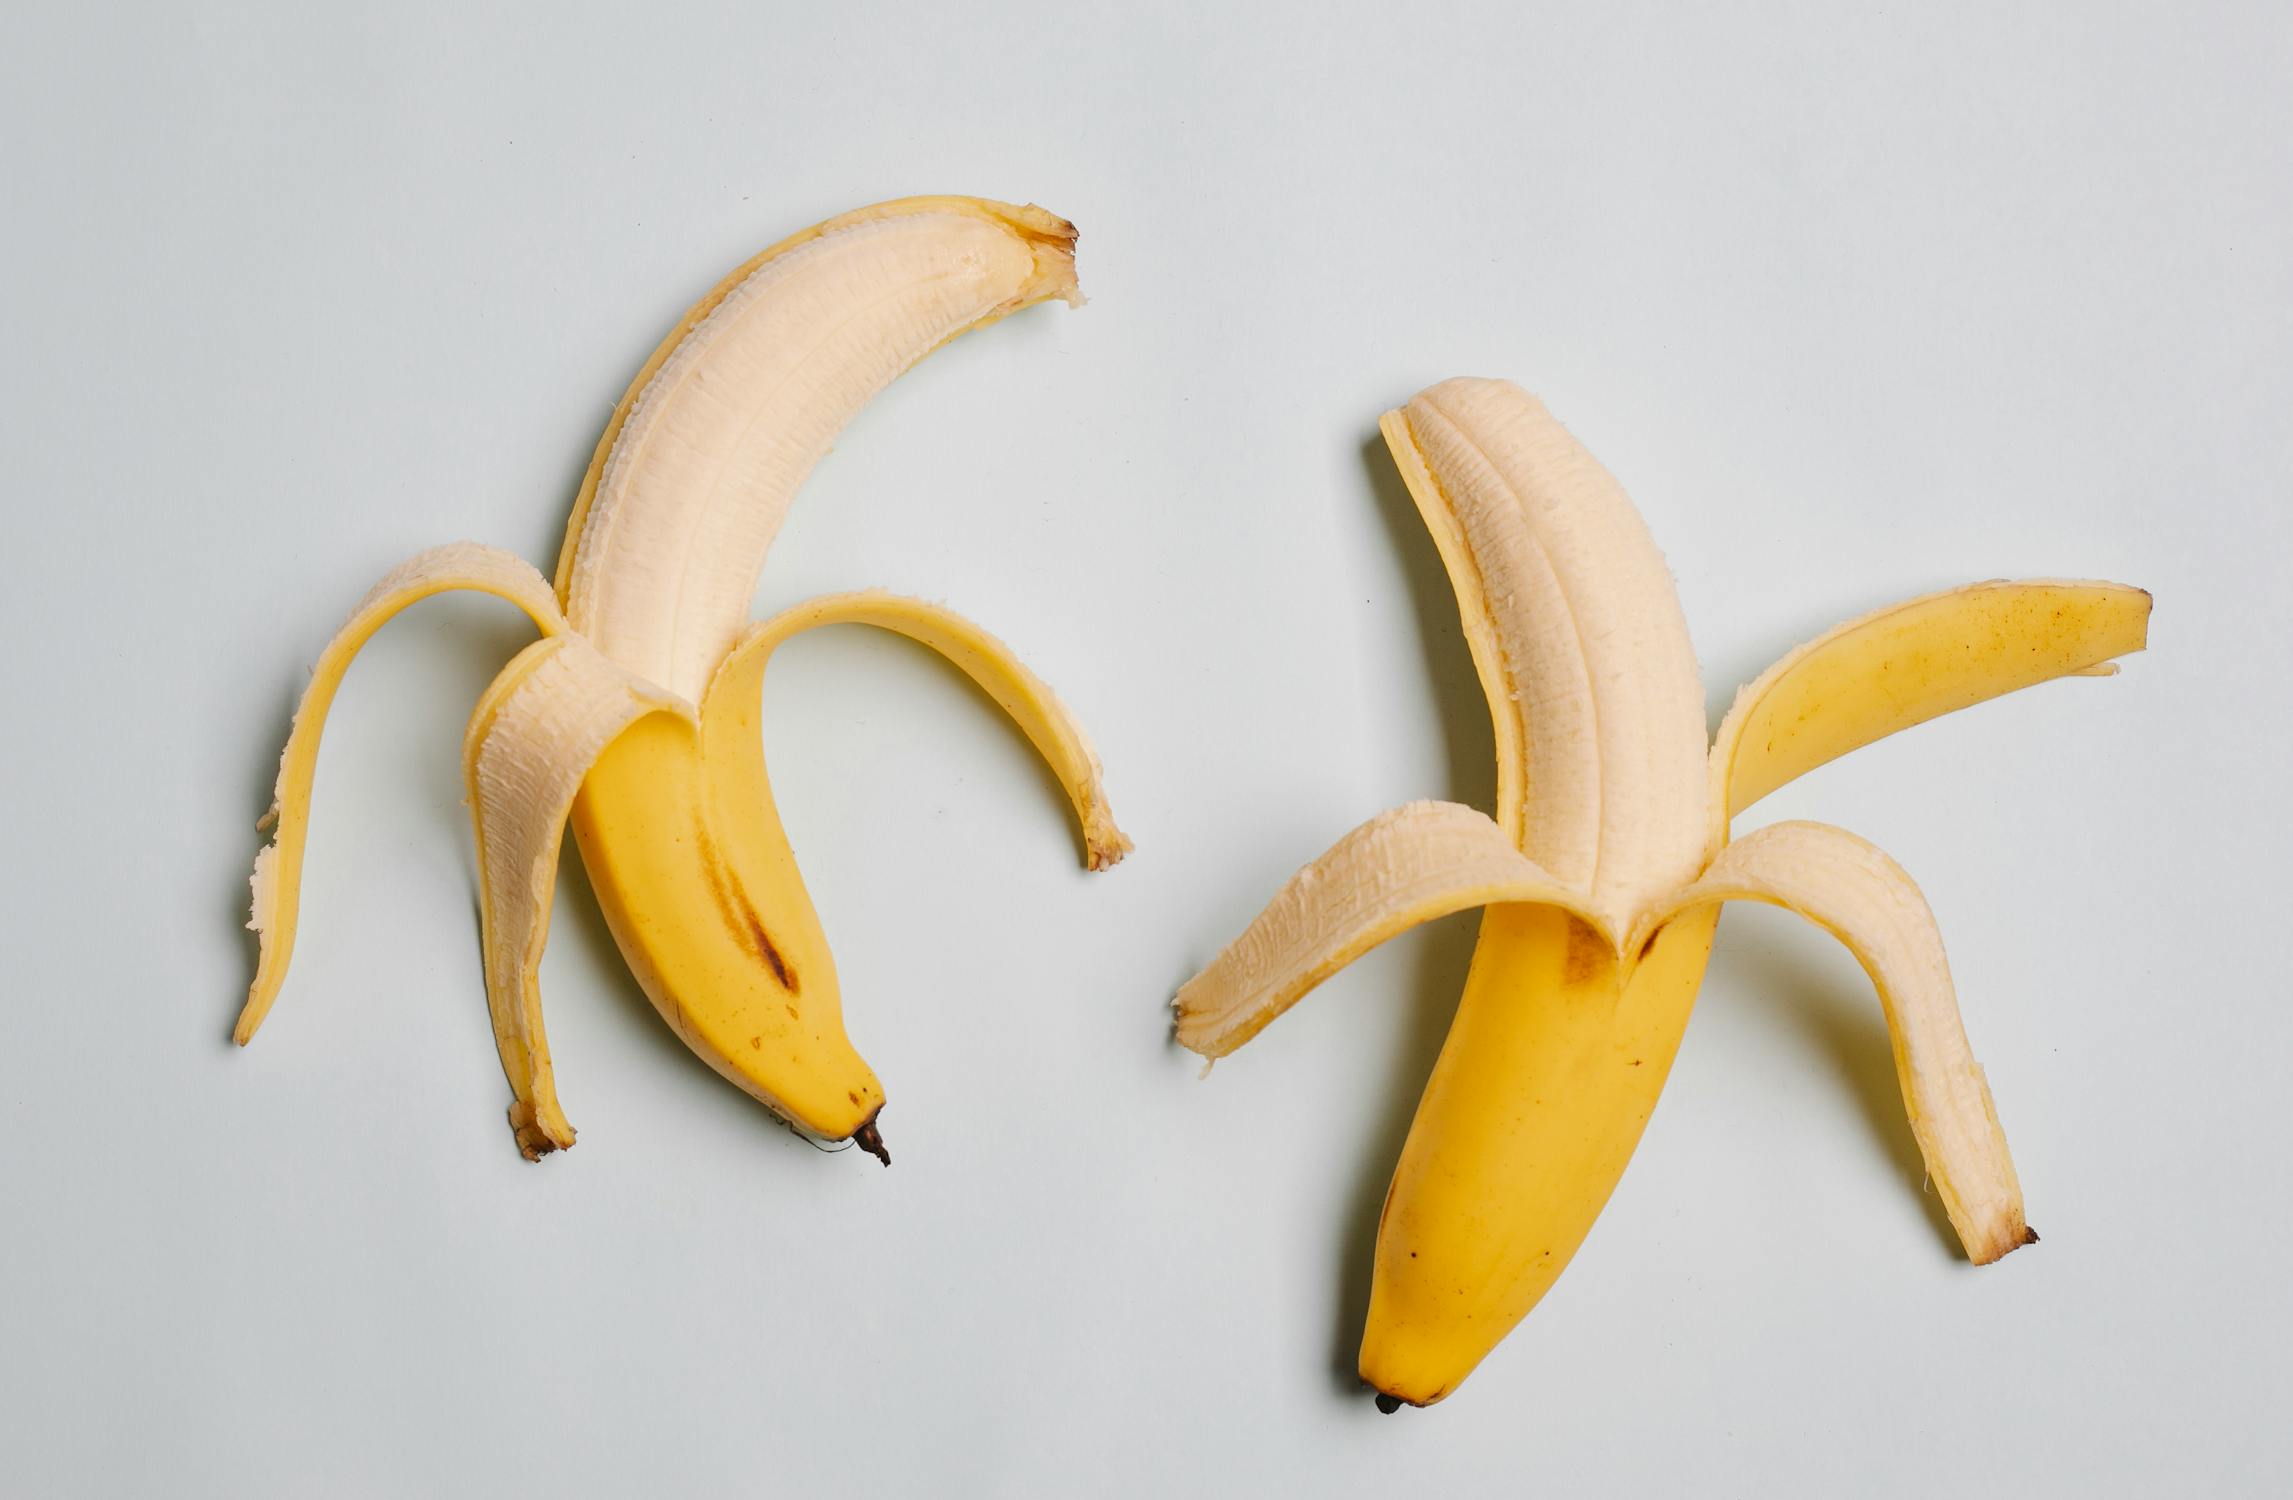 Two peeled bananas